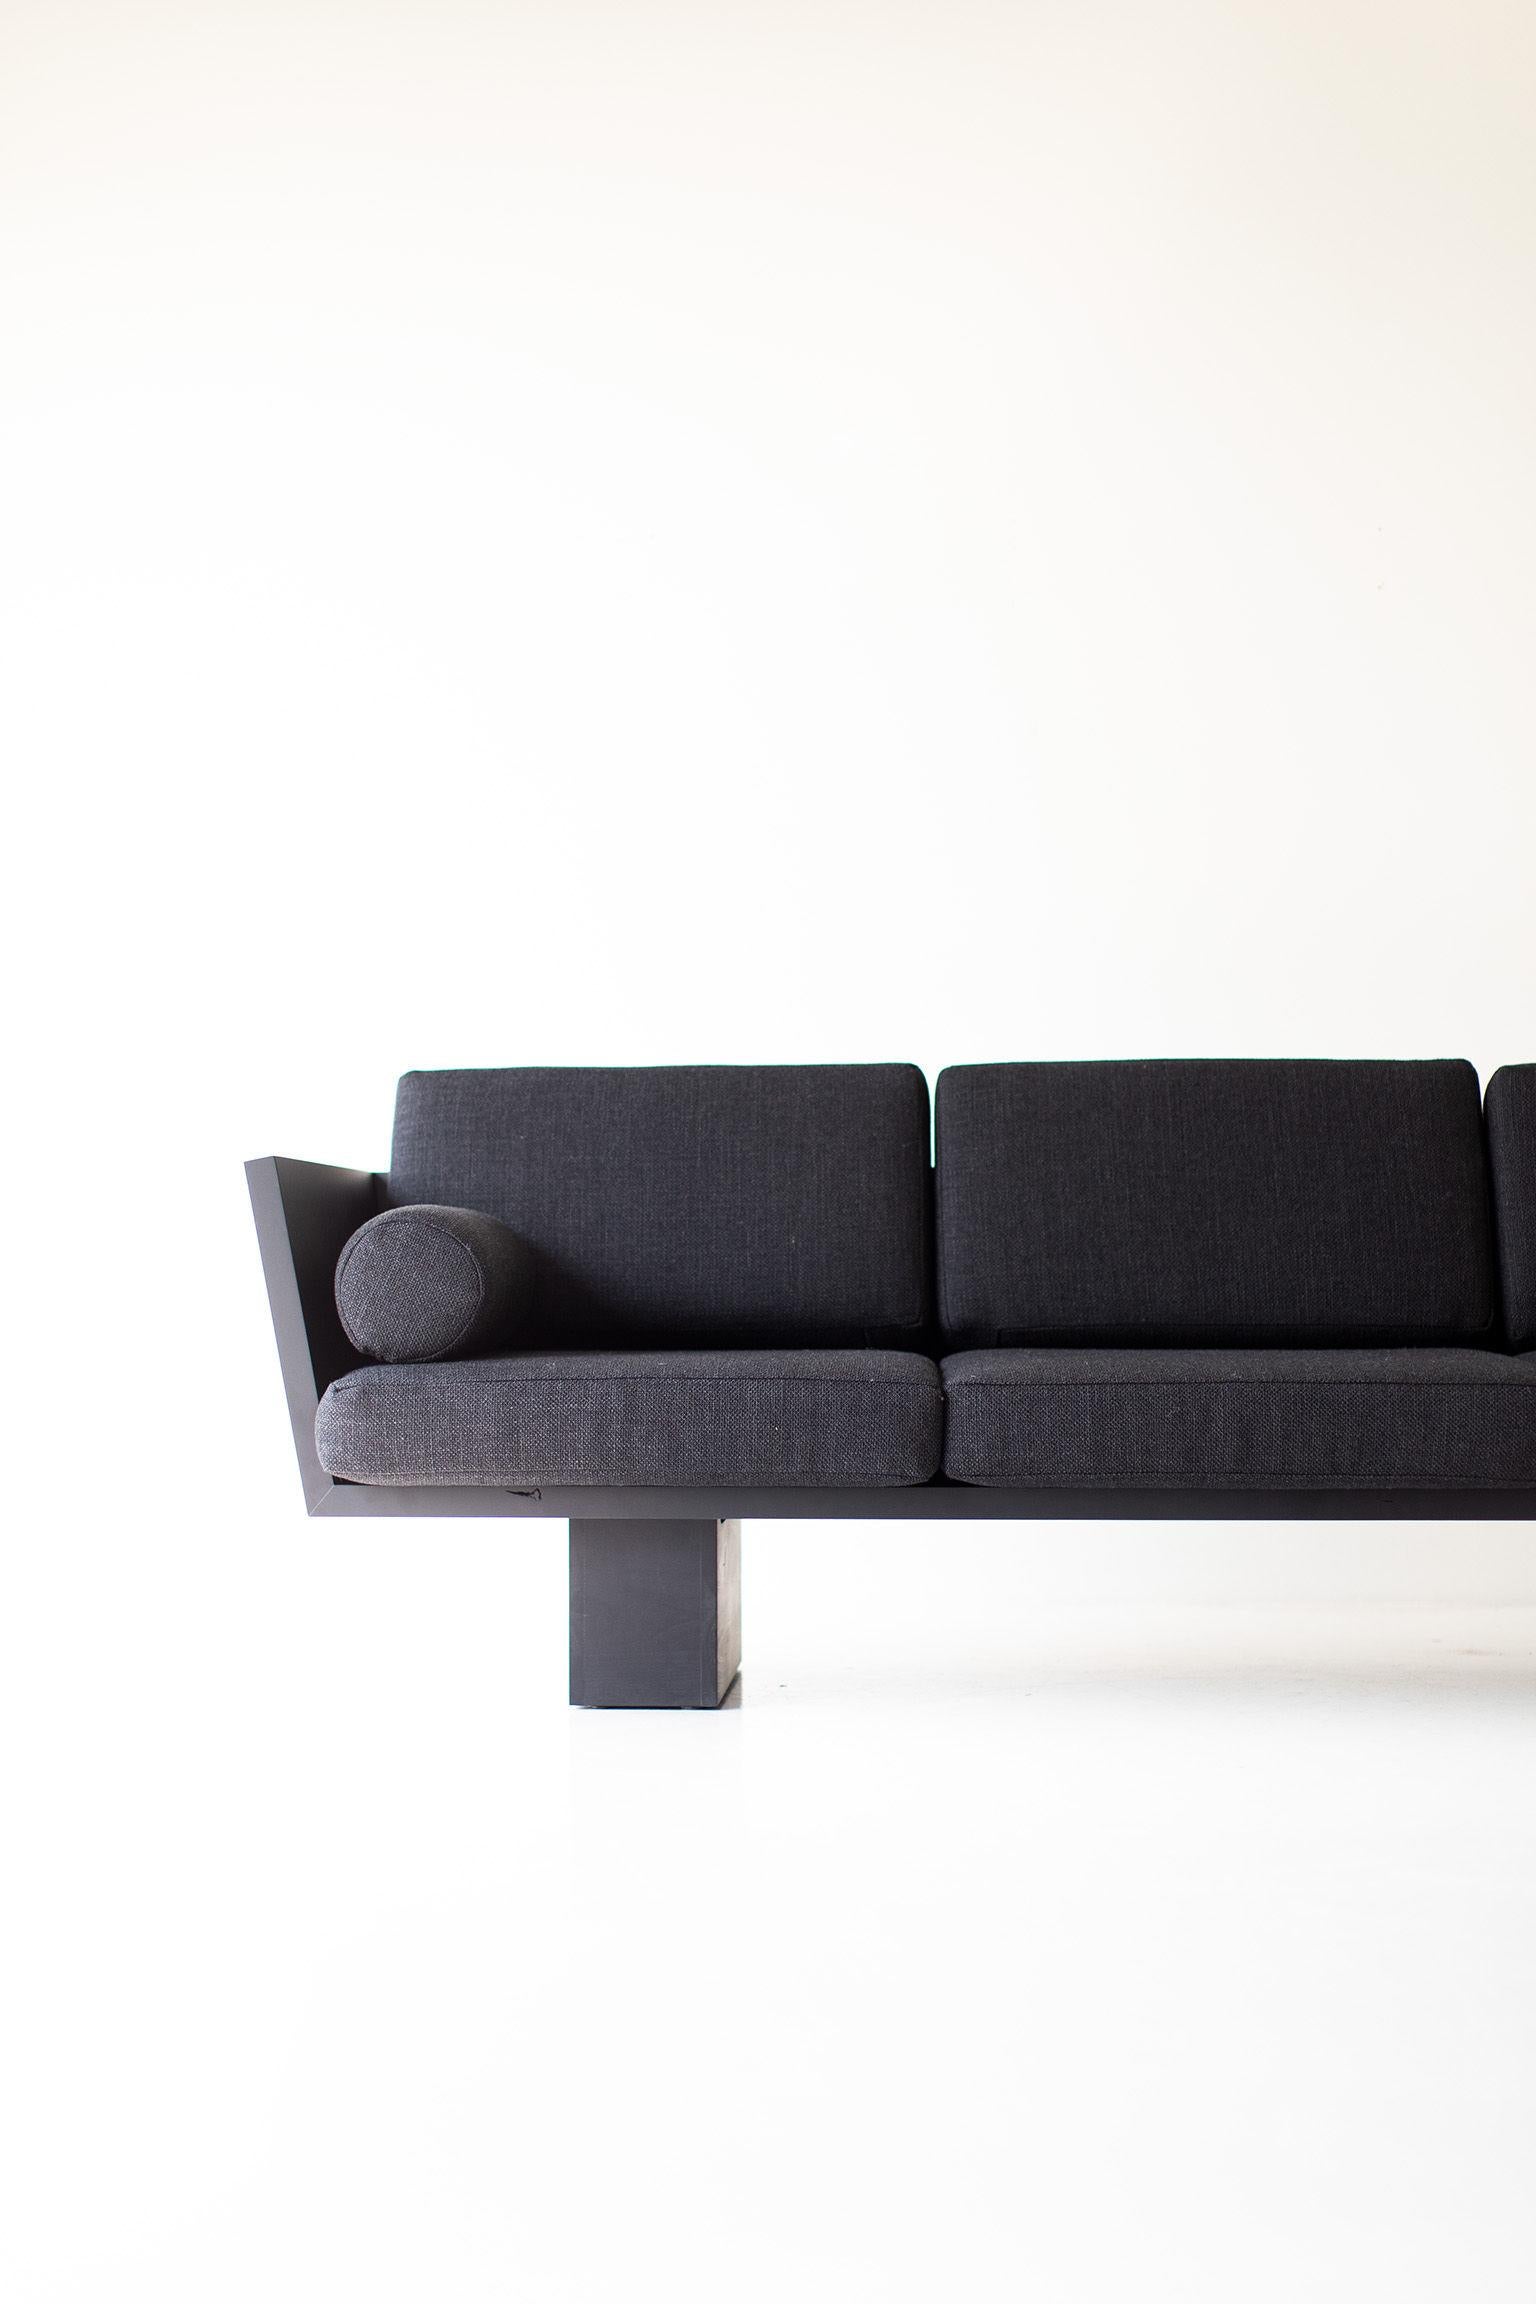 American Suelo Modern Black Sofa For Sale